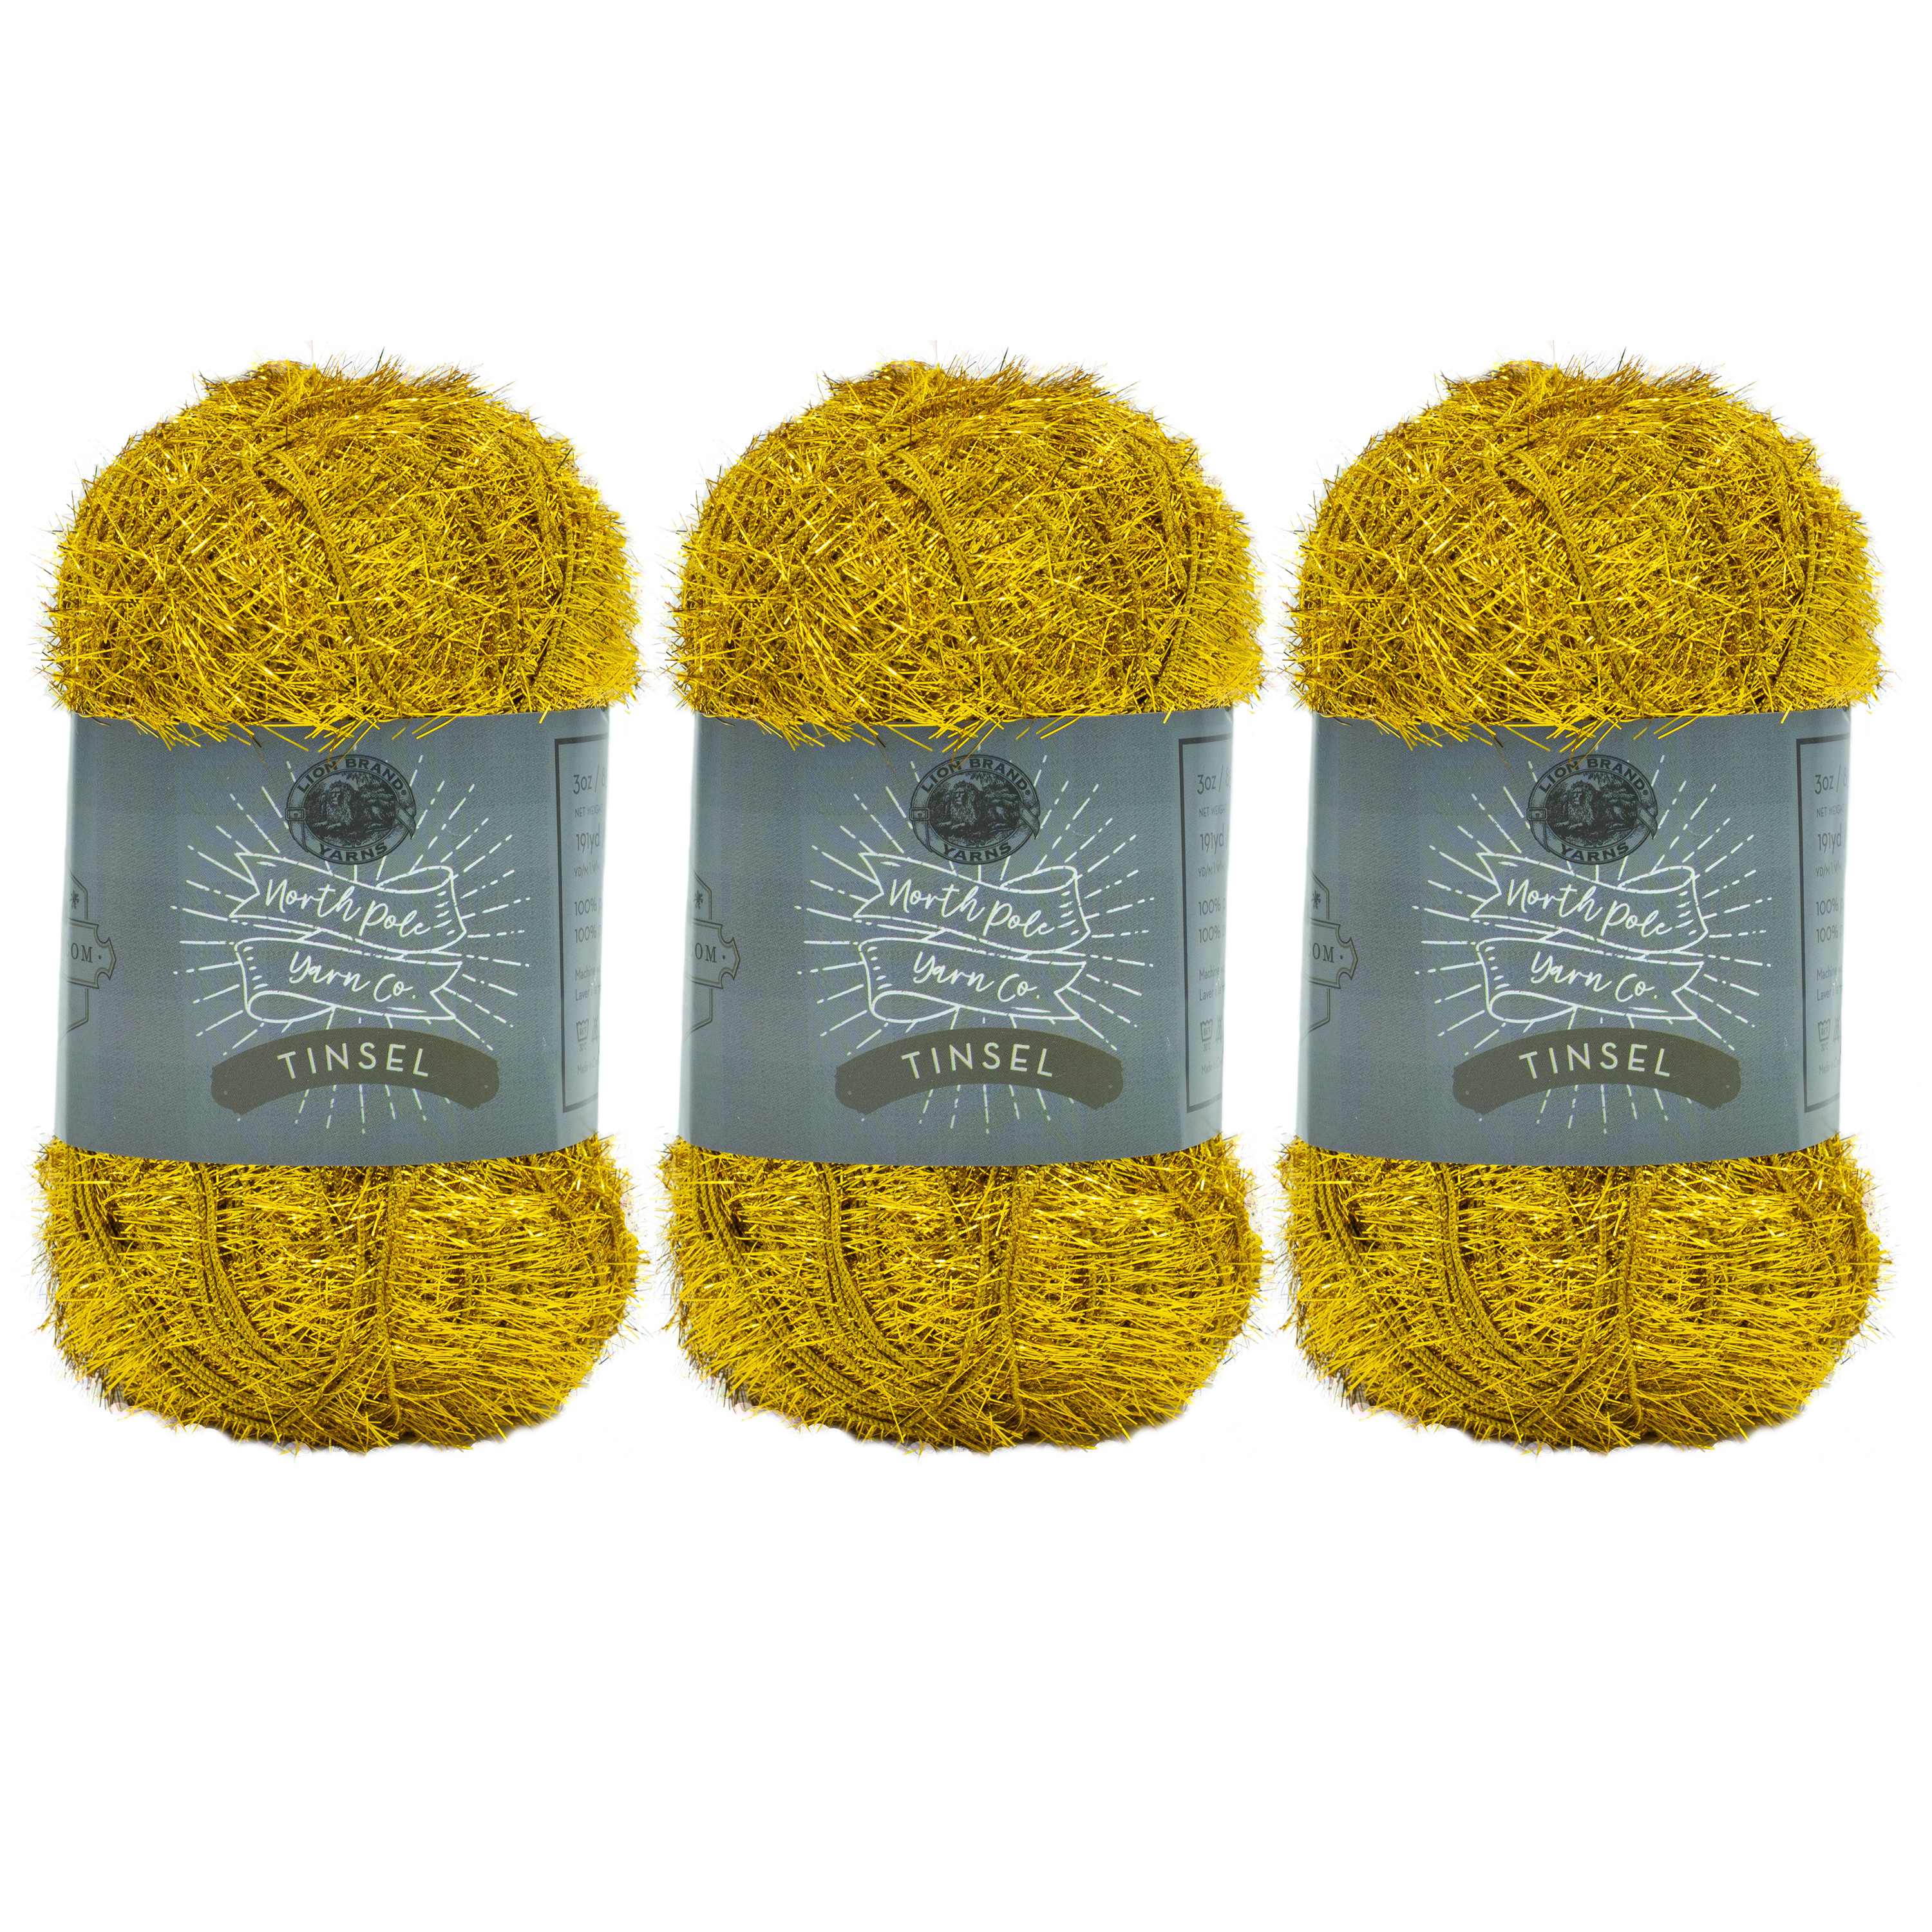 Lion Brand Yarn Tinsel Gold Medium Polyester Gold Yarn 3 Pack